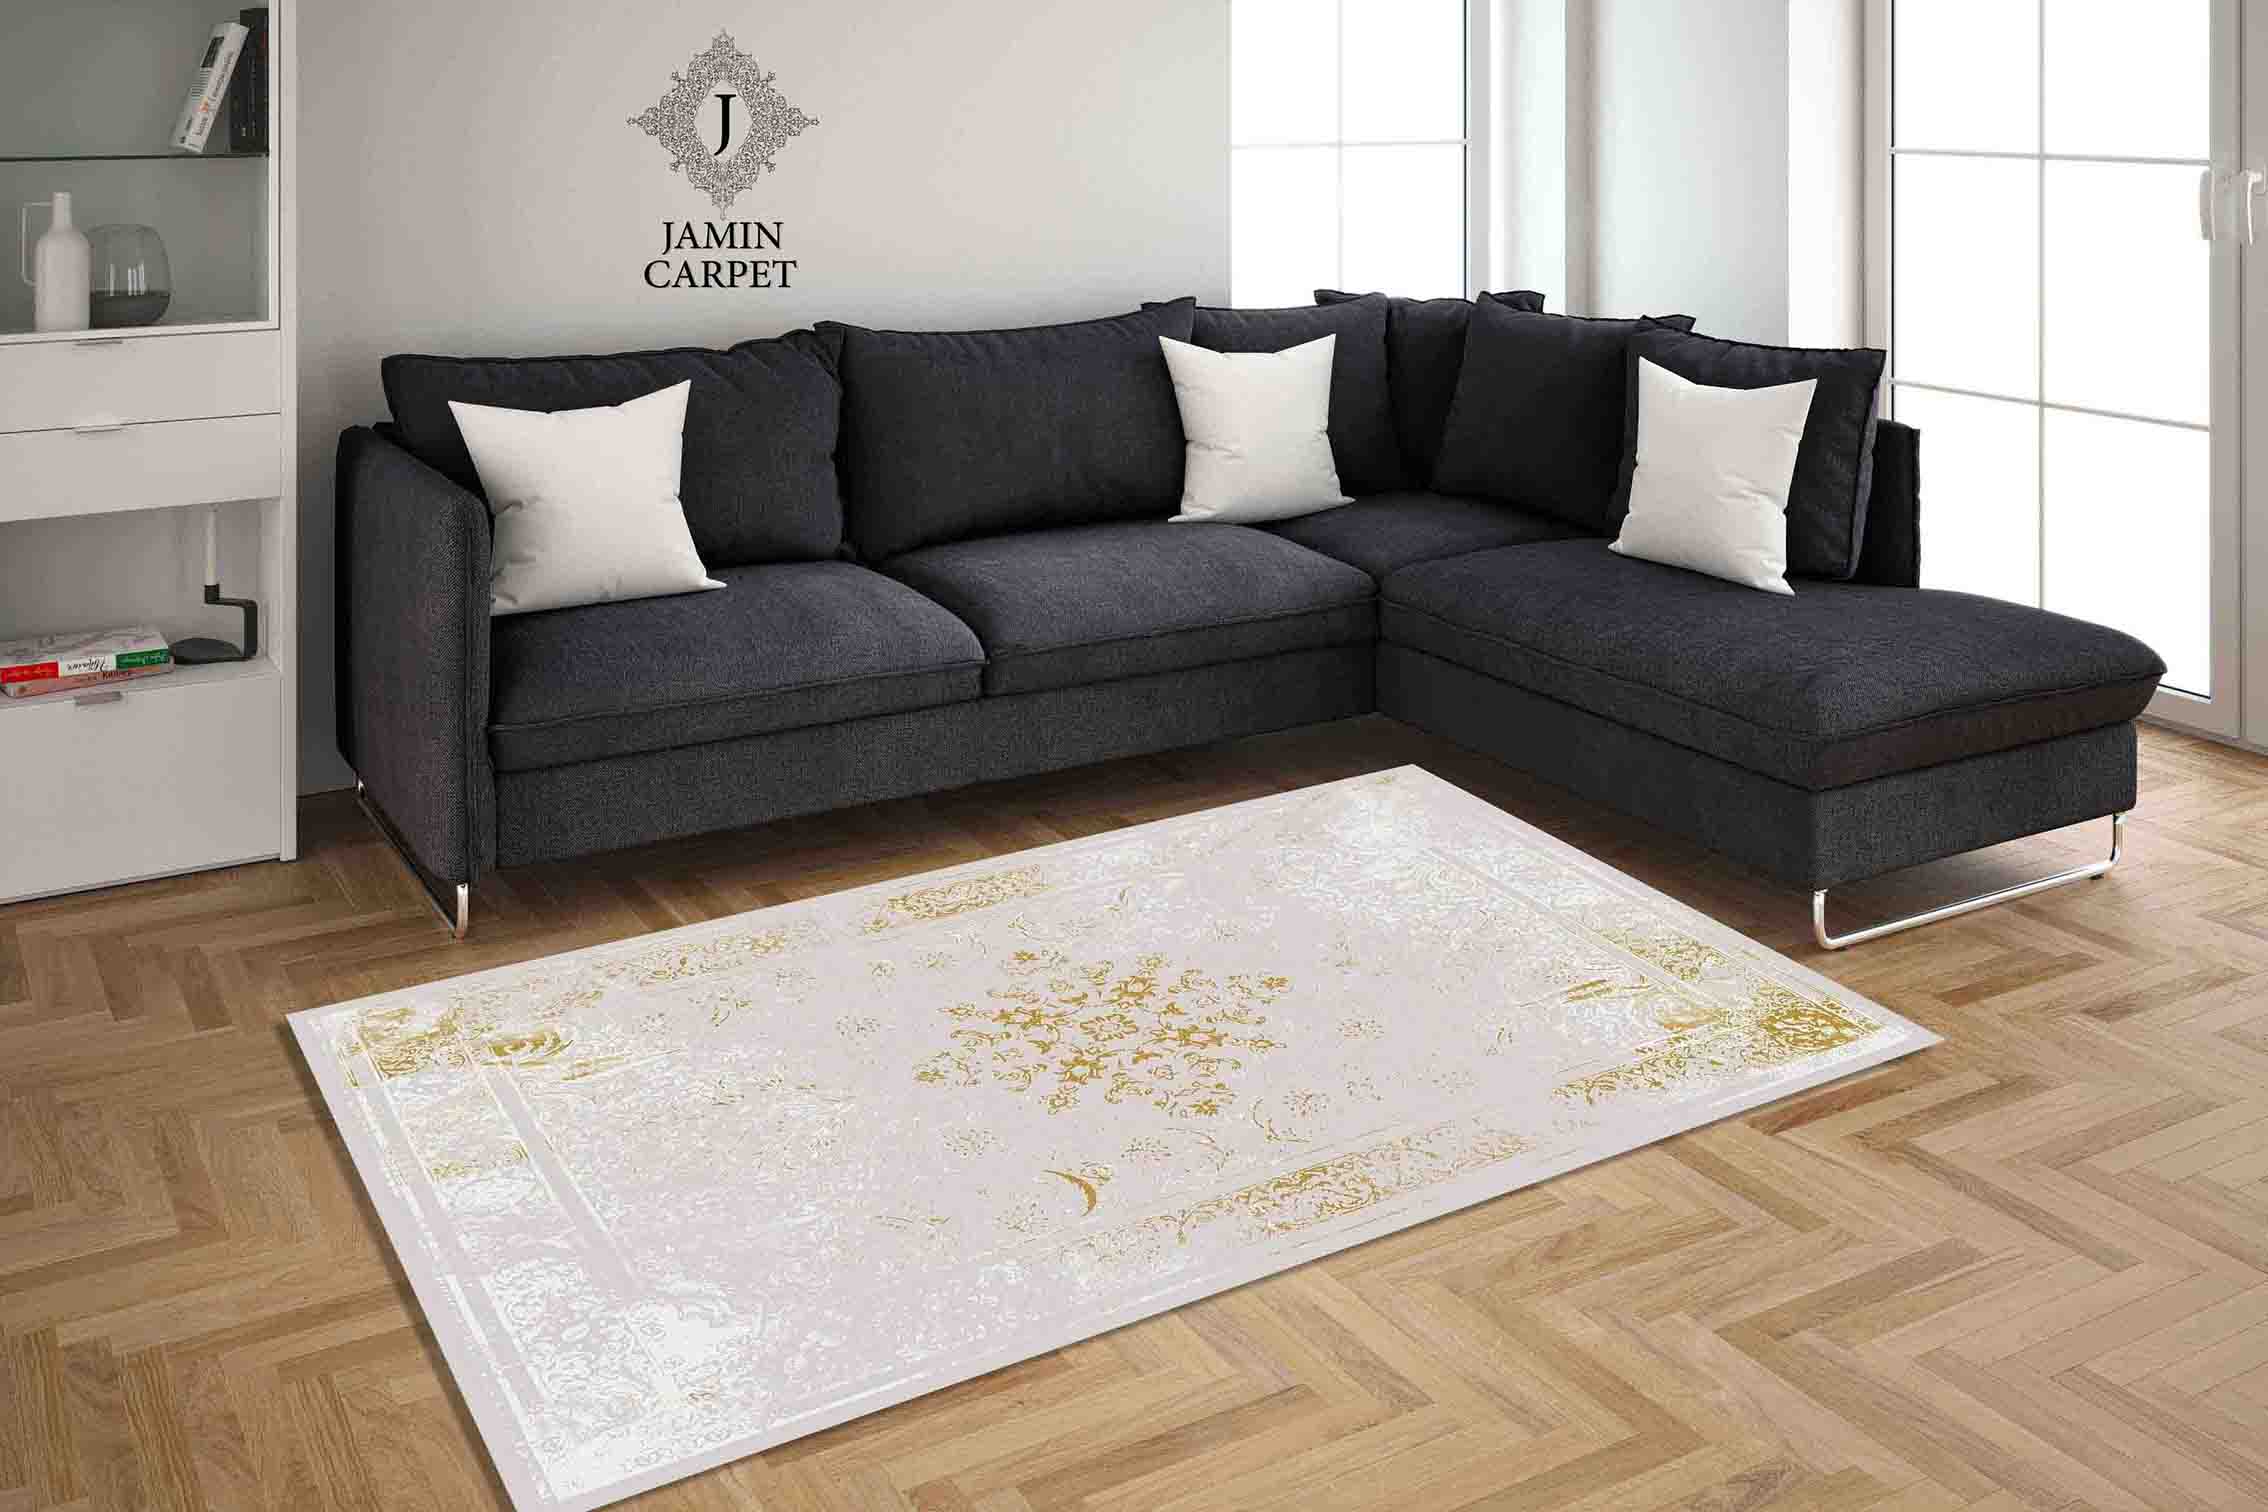 Fantasy carpet, code 255, comb 400, density 1800, all acrylic